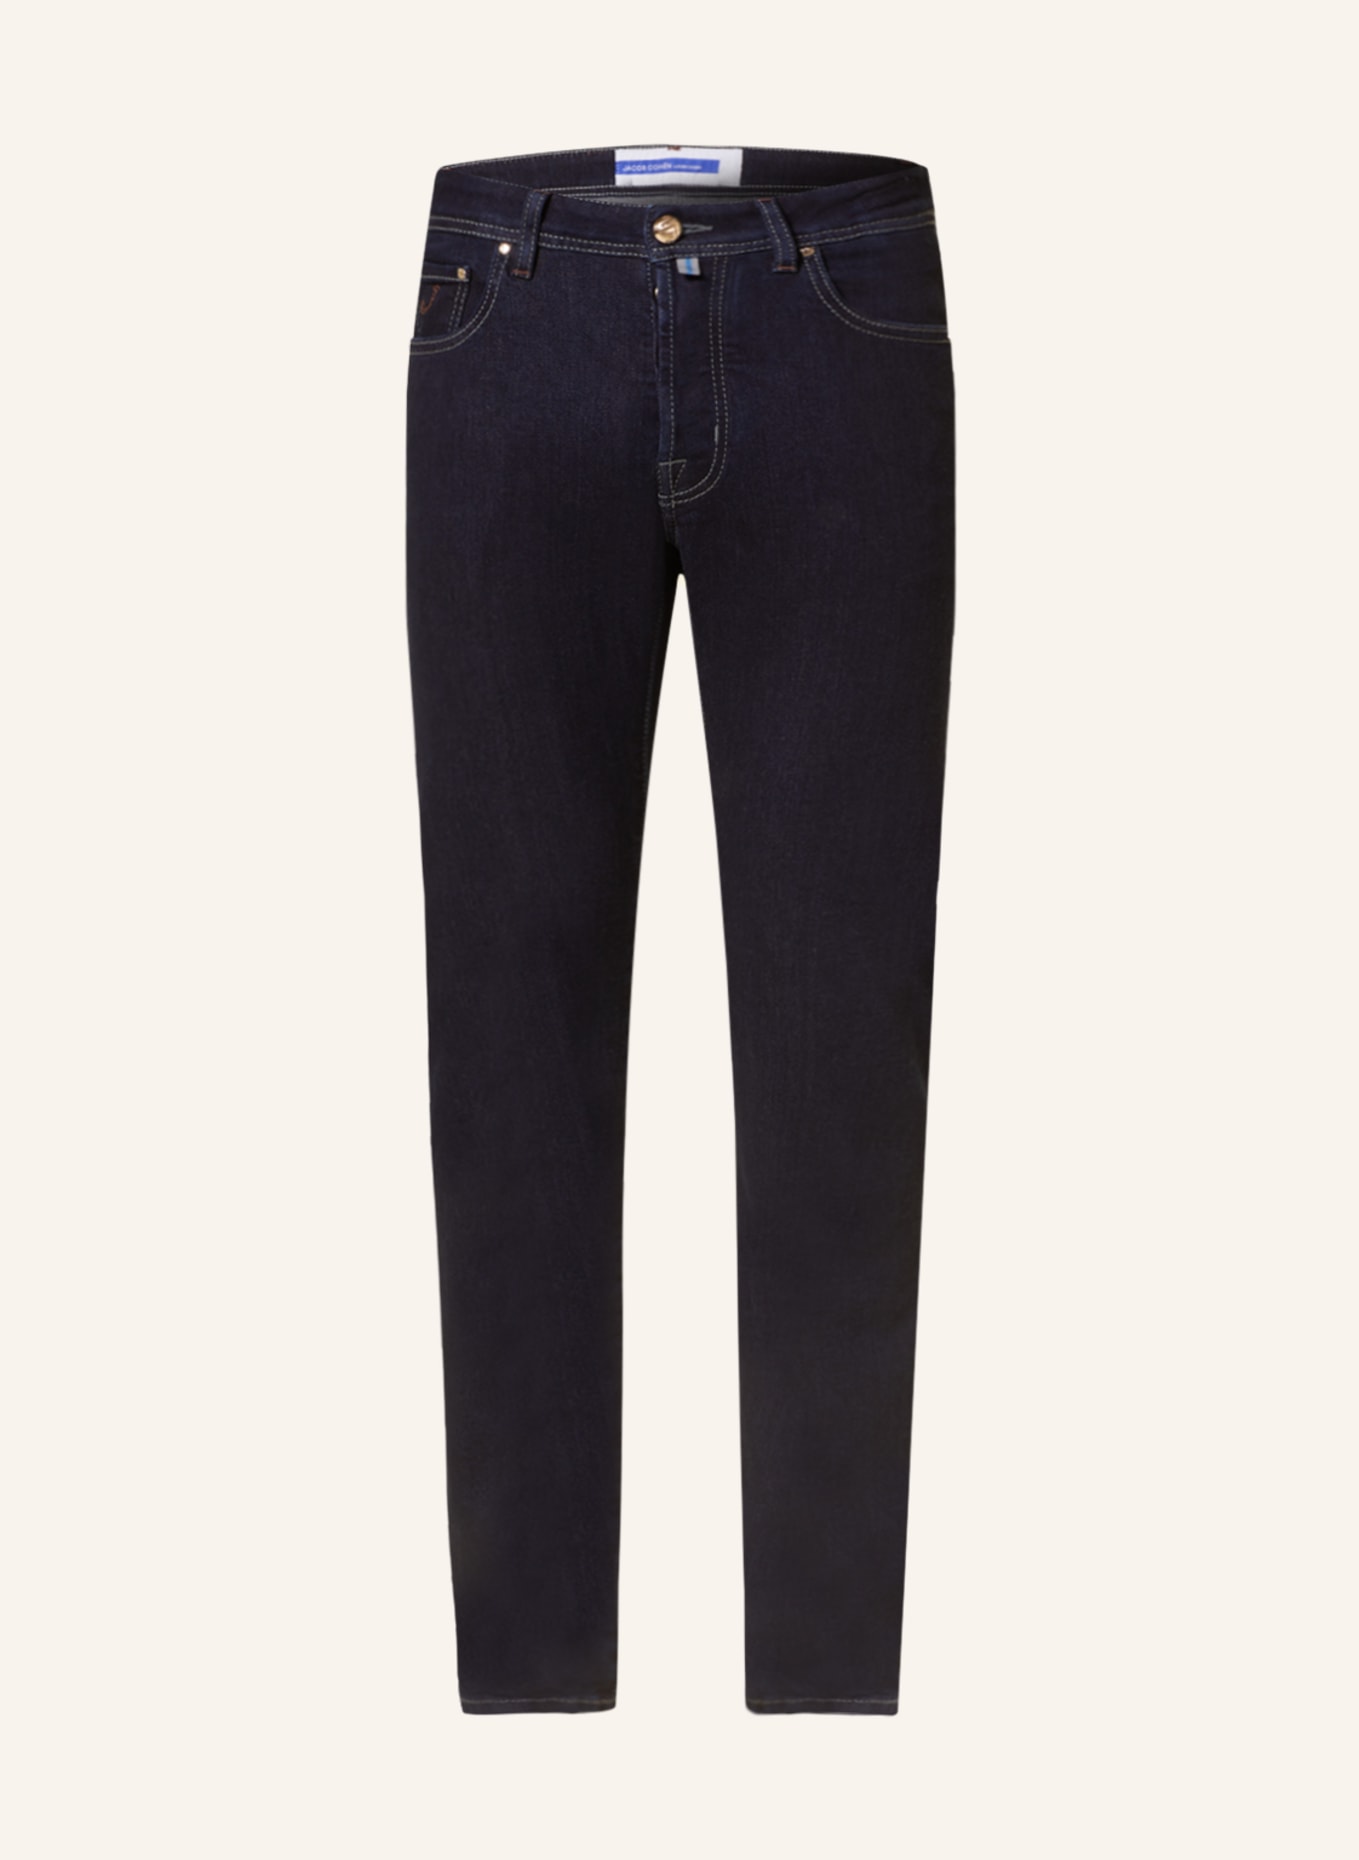 JACOB COHEN Jeans BARD Slim Fit, Farbe: 556D Dark Blue (Bild 1)